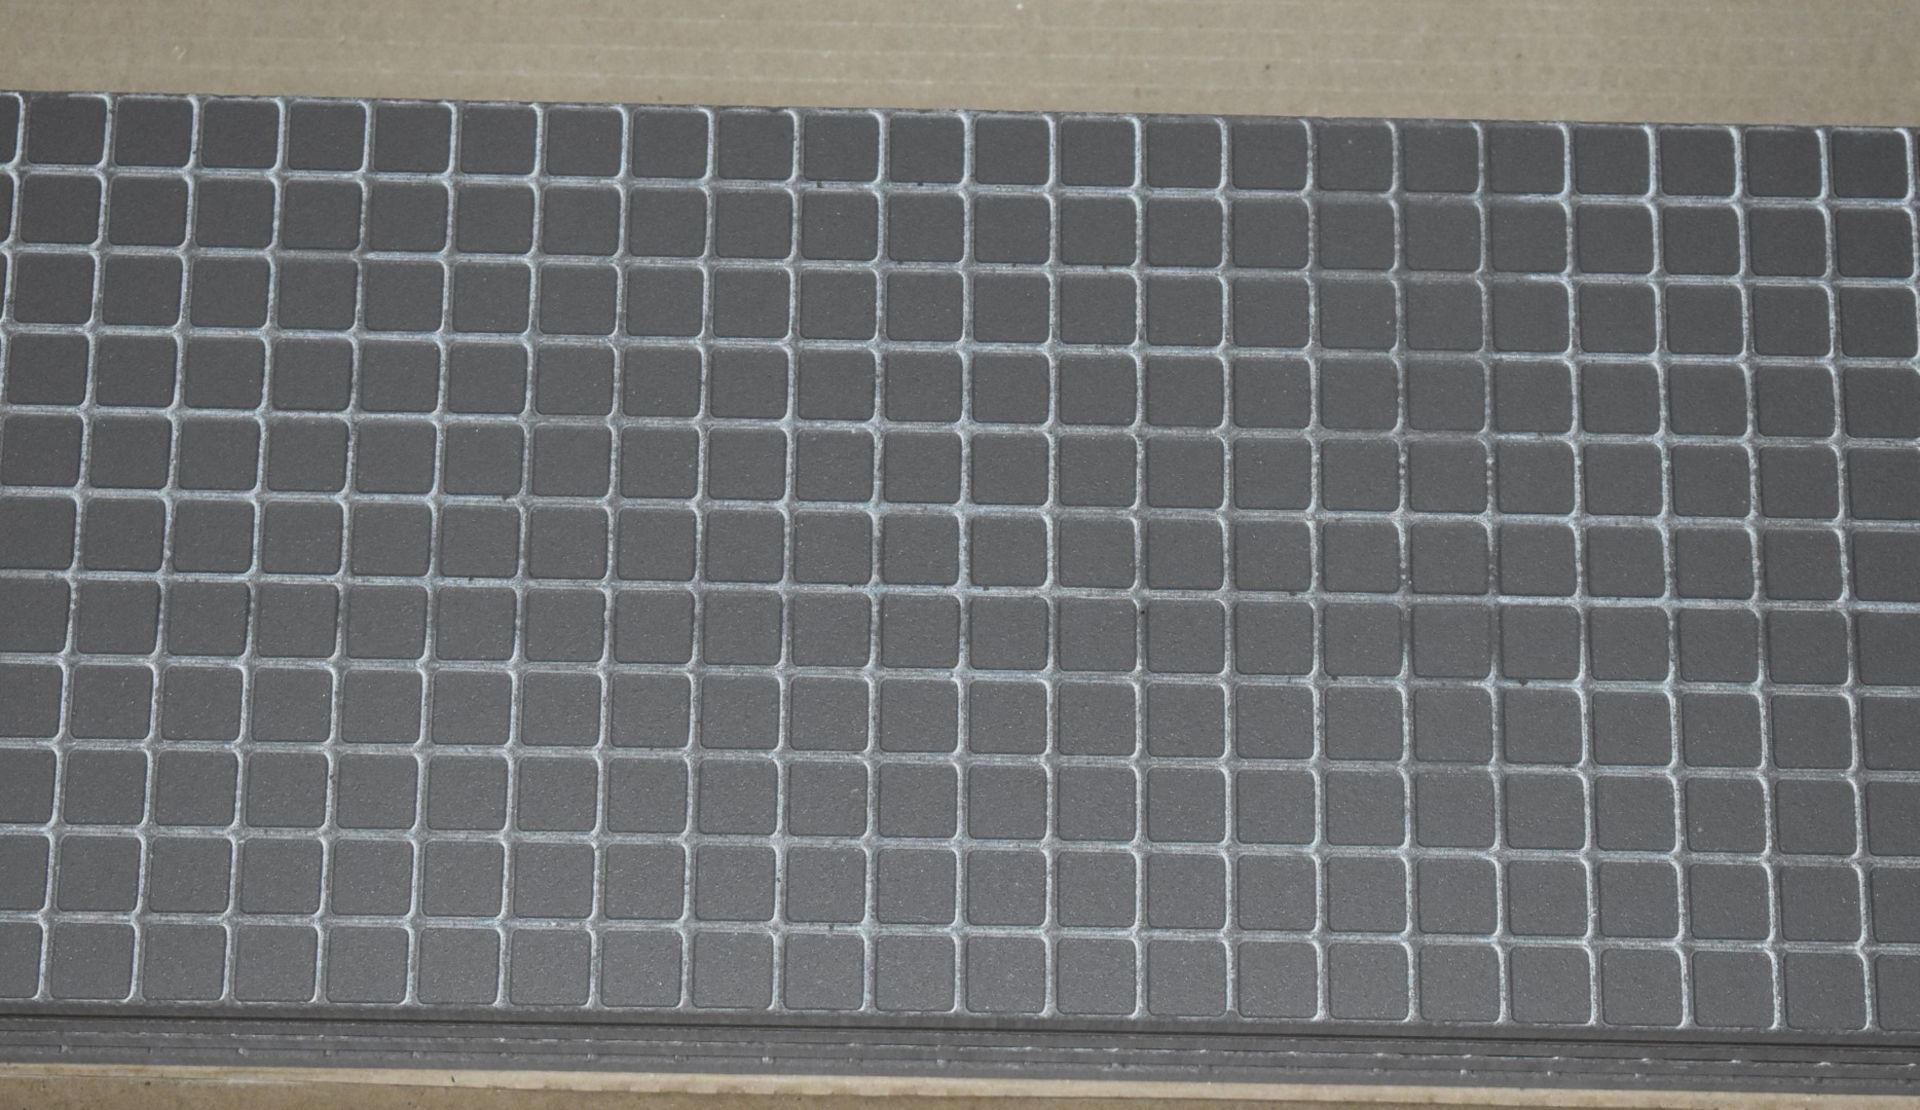 12 x Boxes of RAK Porcelain Floor or Wall Tiles - M Project Wood Design in Dark Grey - 19.5 x 120 cm - Image 4 of 8